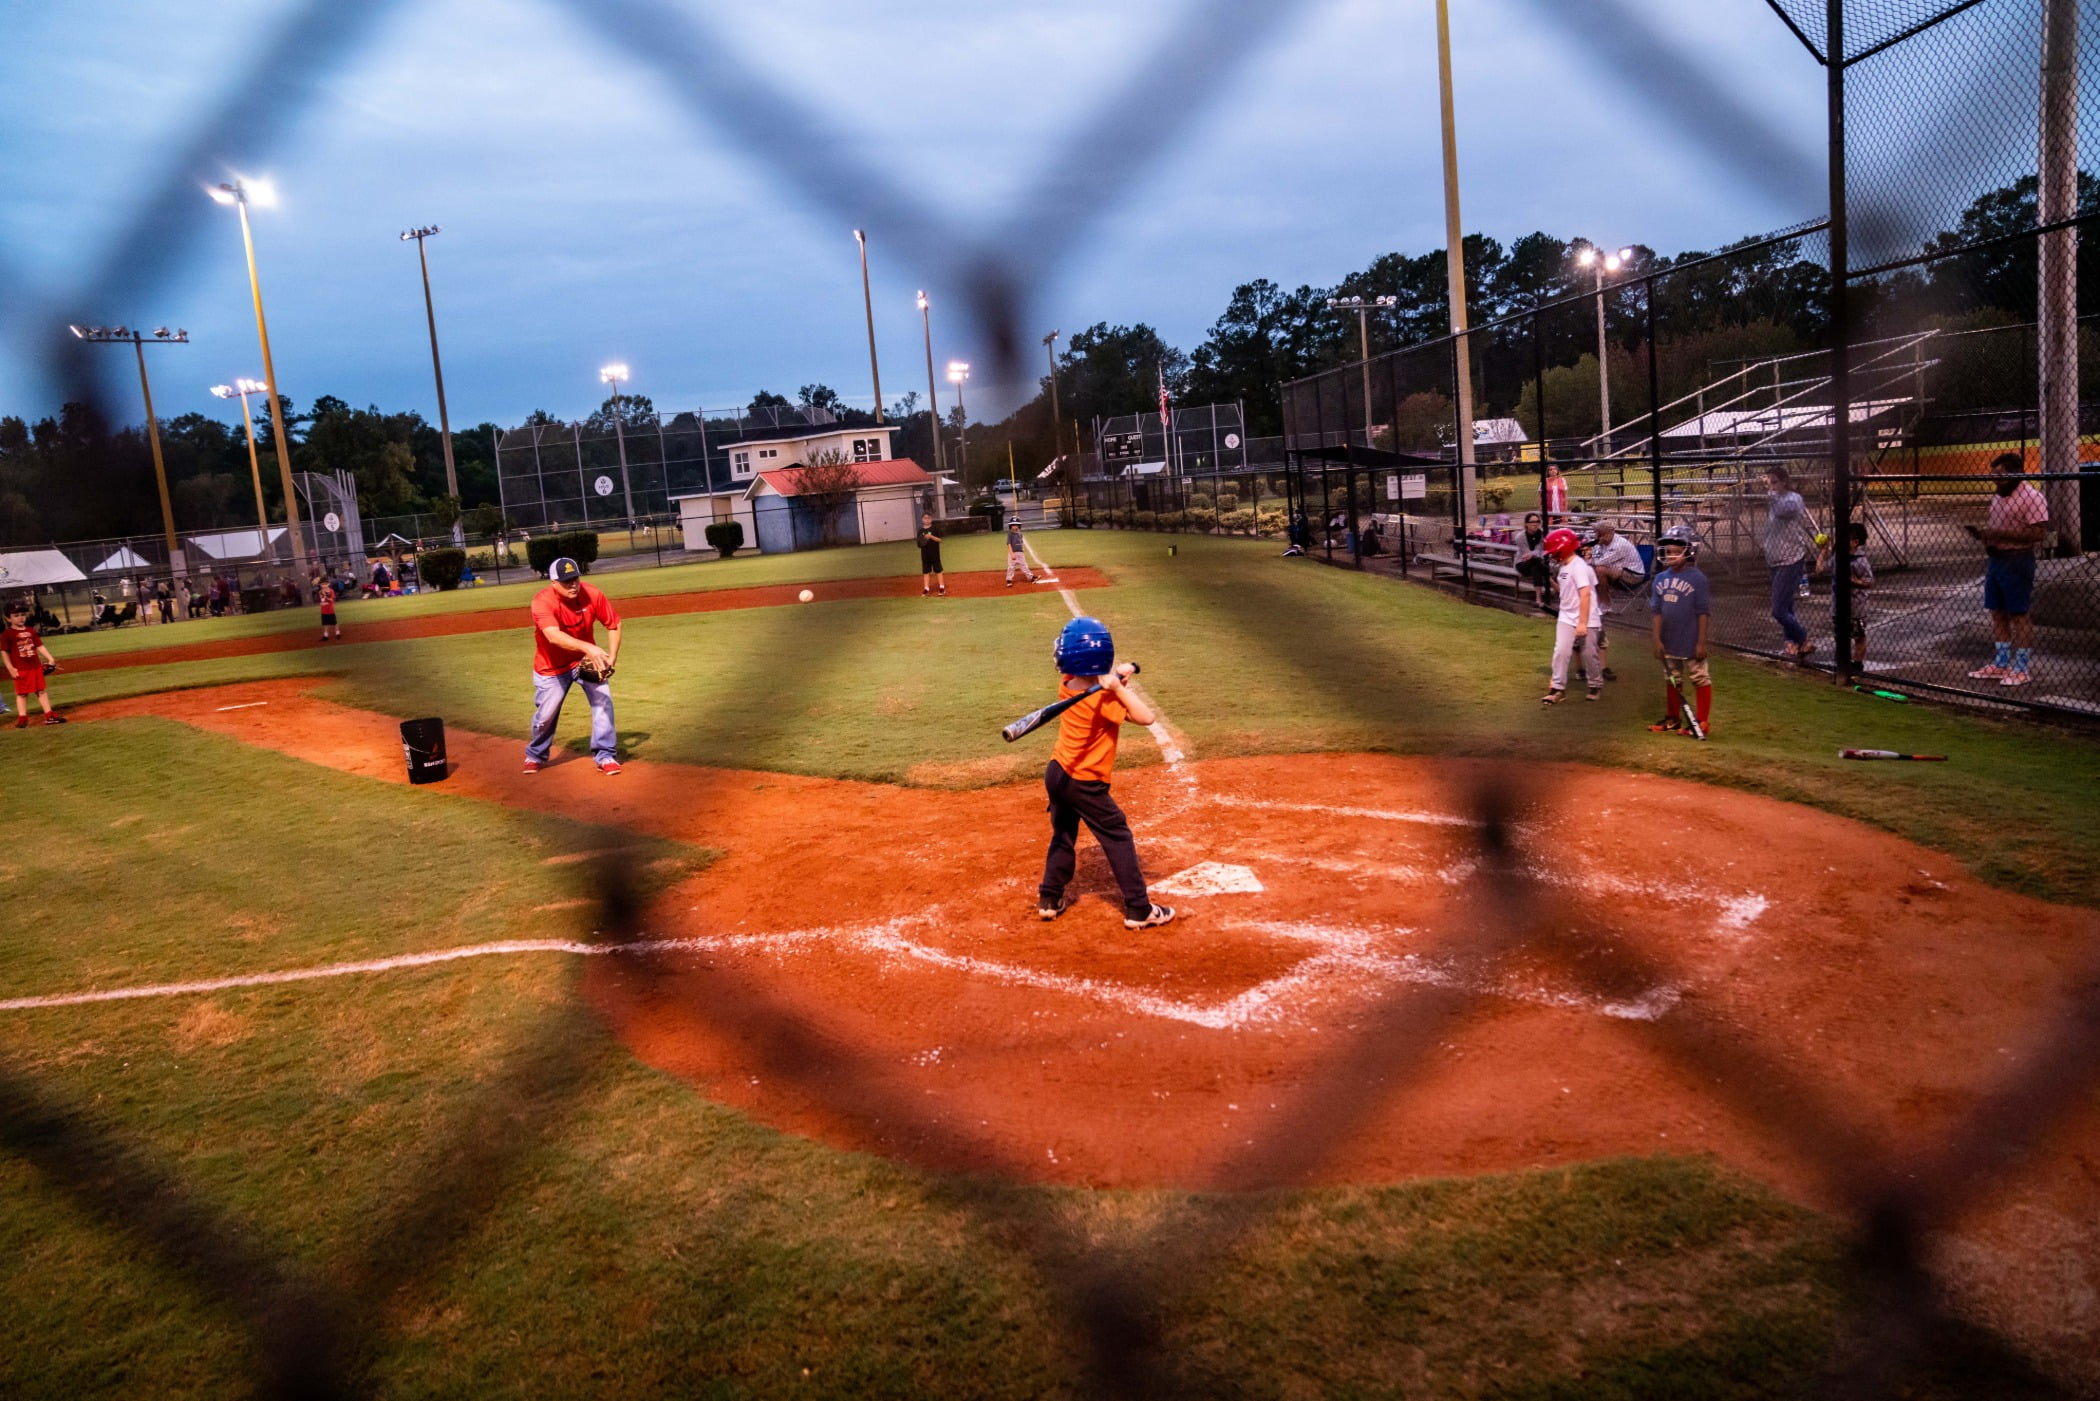 Baseball park, Bat-and-ball games, Sports equipment, Sky, Cloud